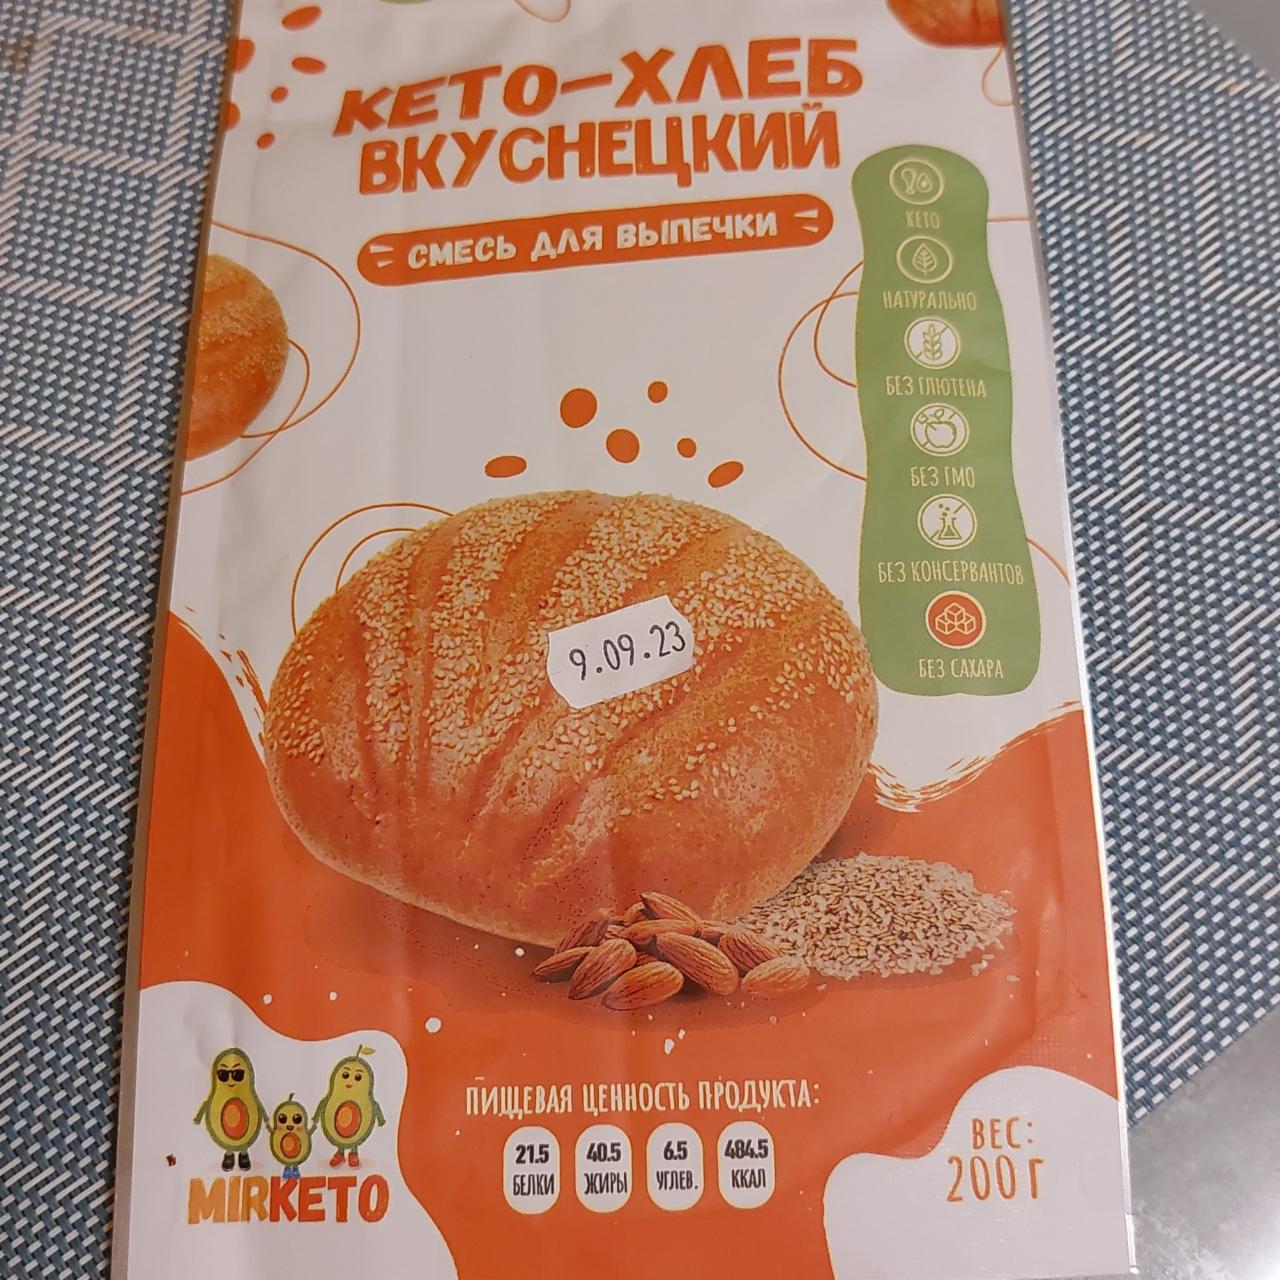 Фото - кето-хлеб вкуснецкий (смесь для выпечки) Mirketo